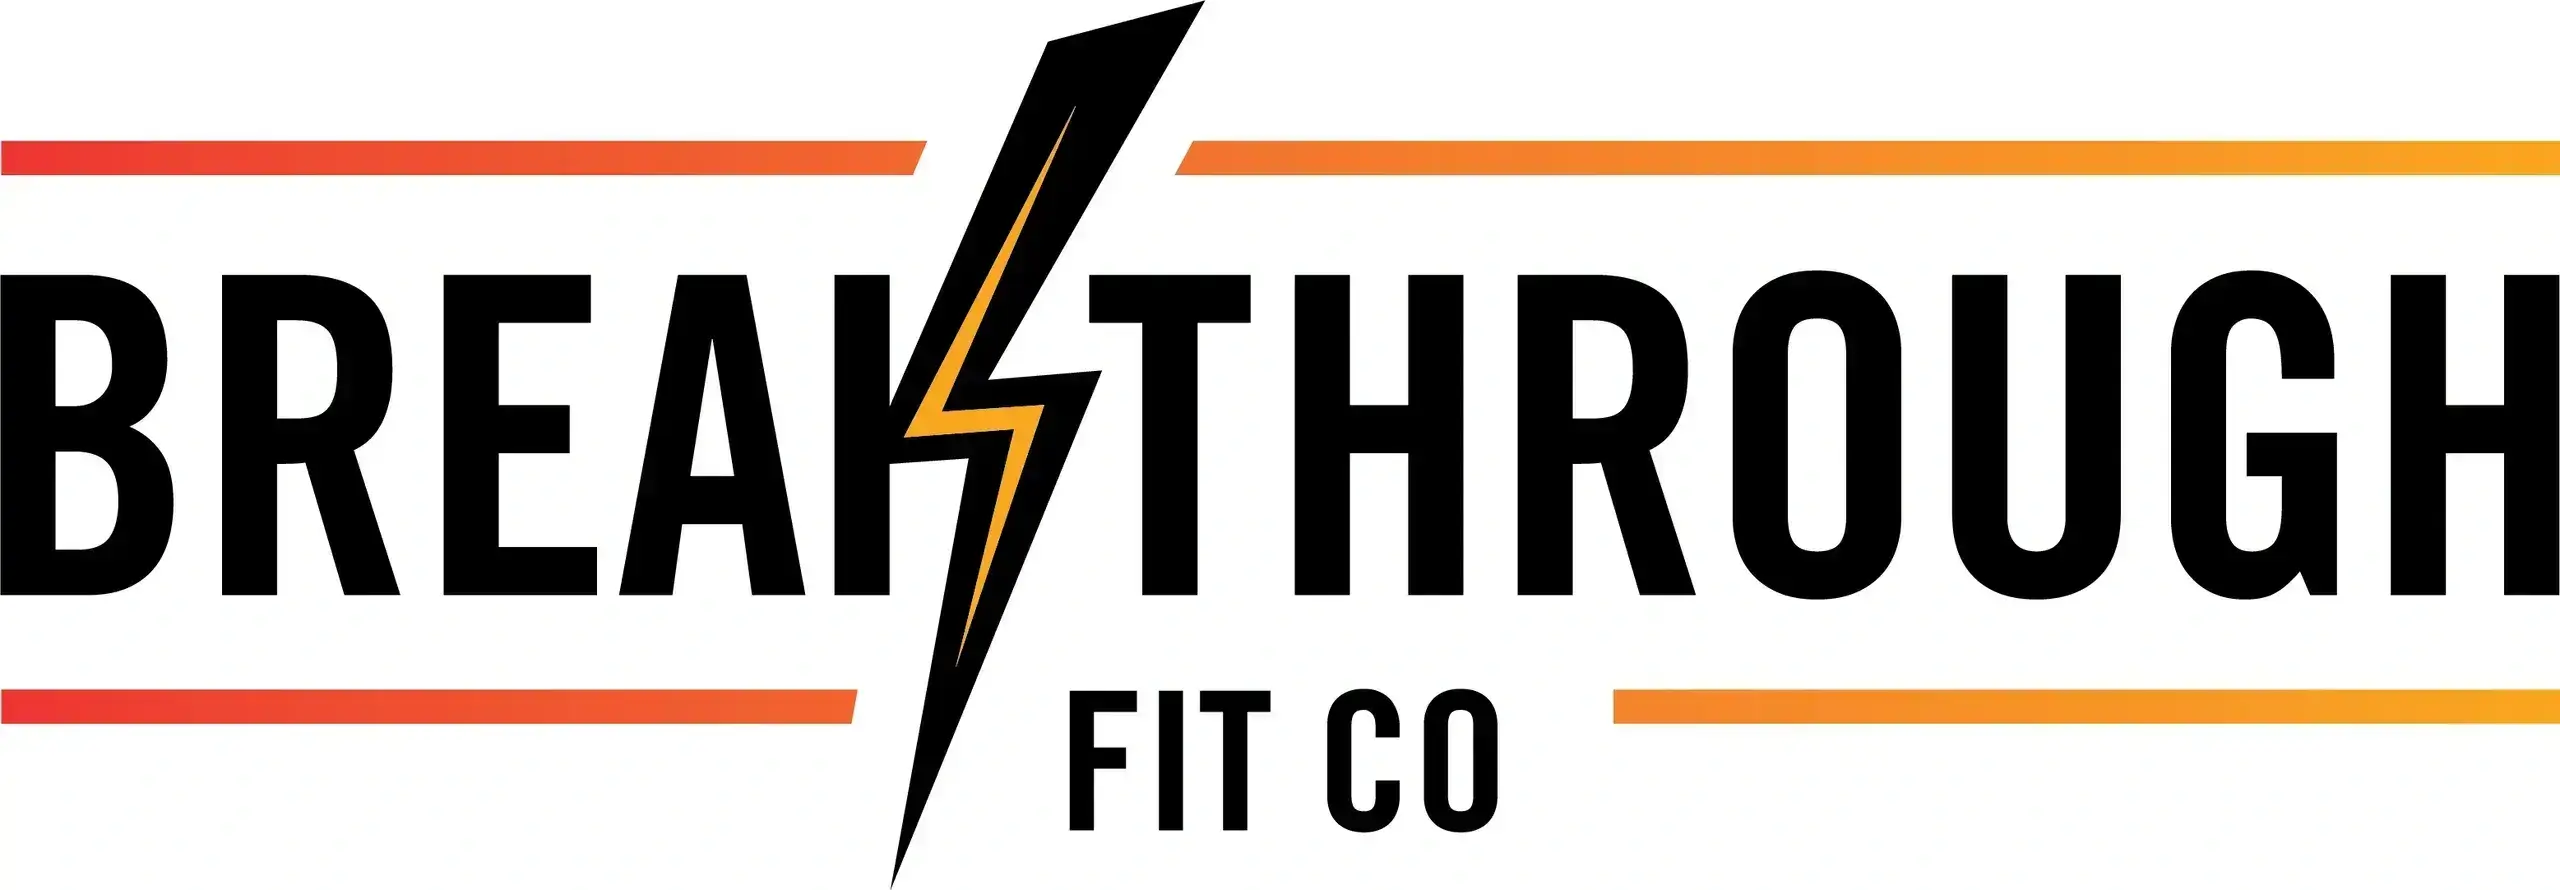 Breakthrough Fit Co logo